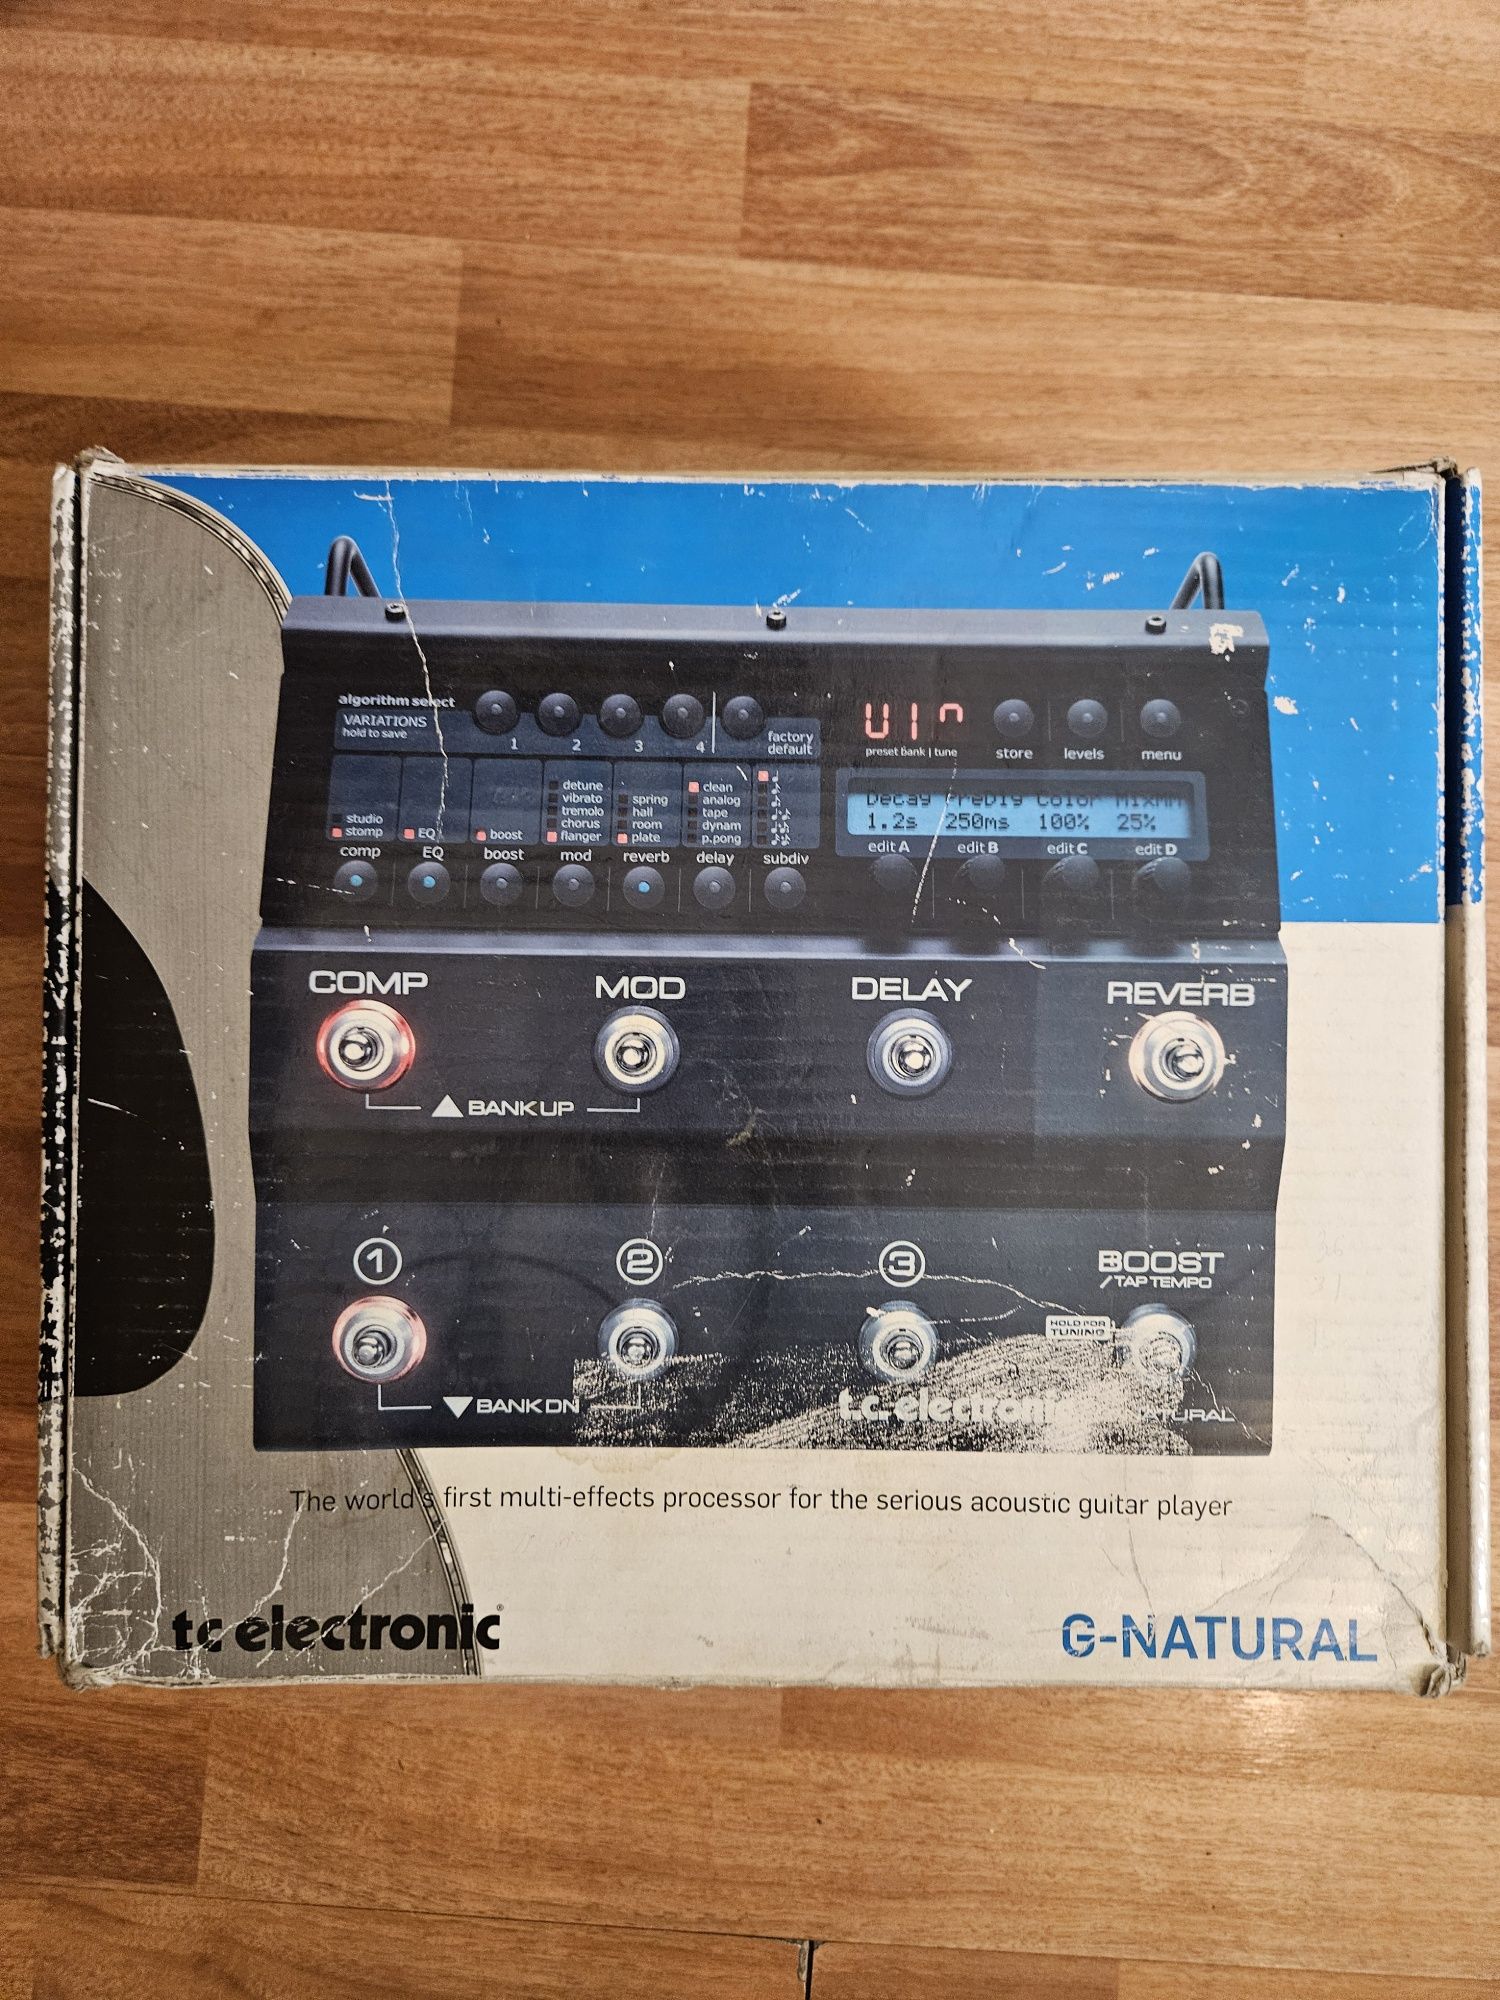 TC electronic G-NATURAL